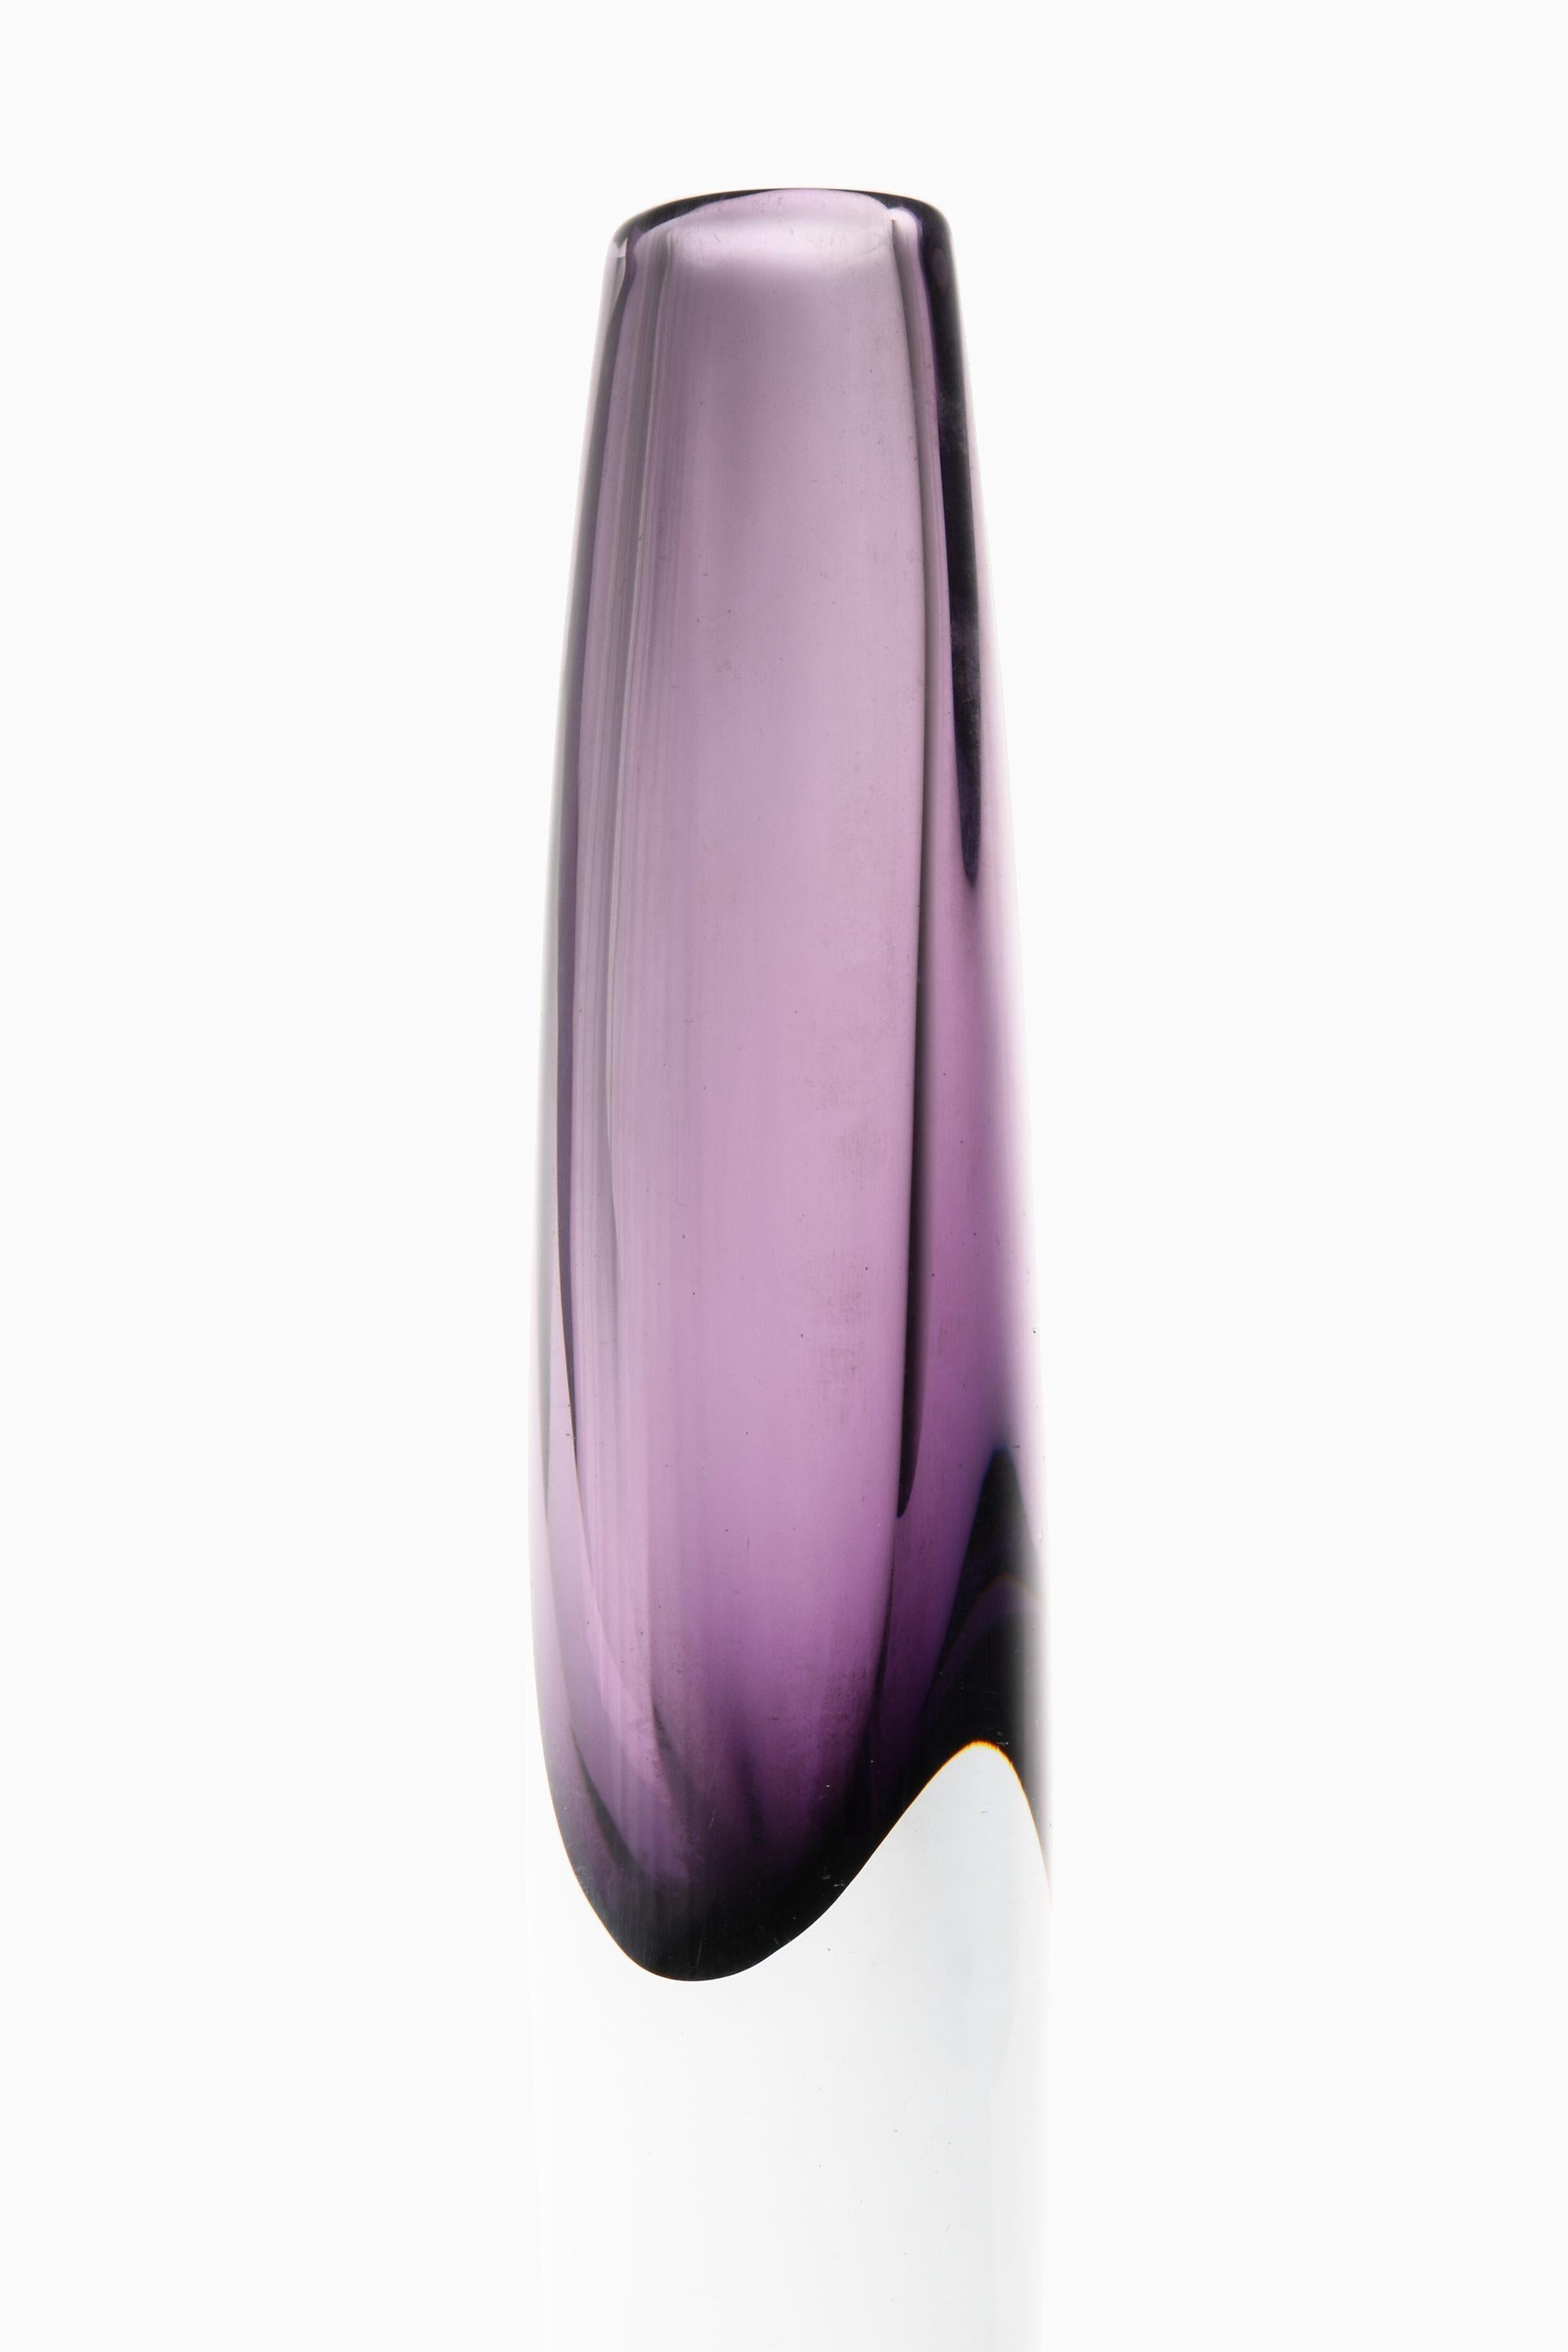 Scandinavian Modern Glass Vase in Purple by Gunnar Nylund, 1950's For Sale